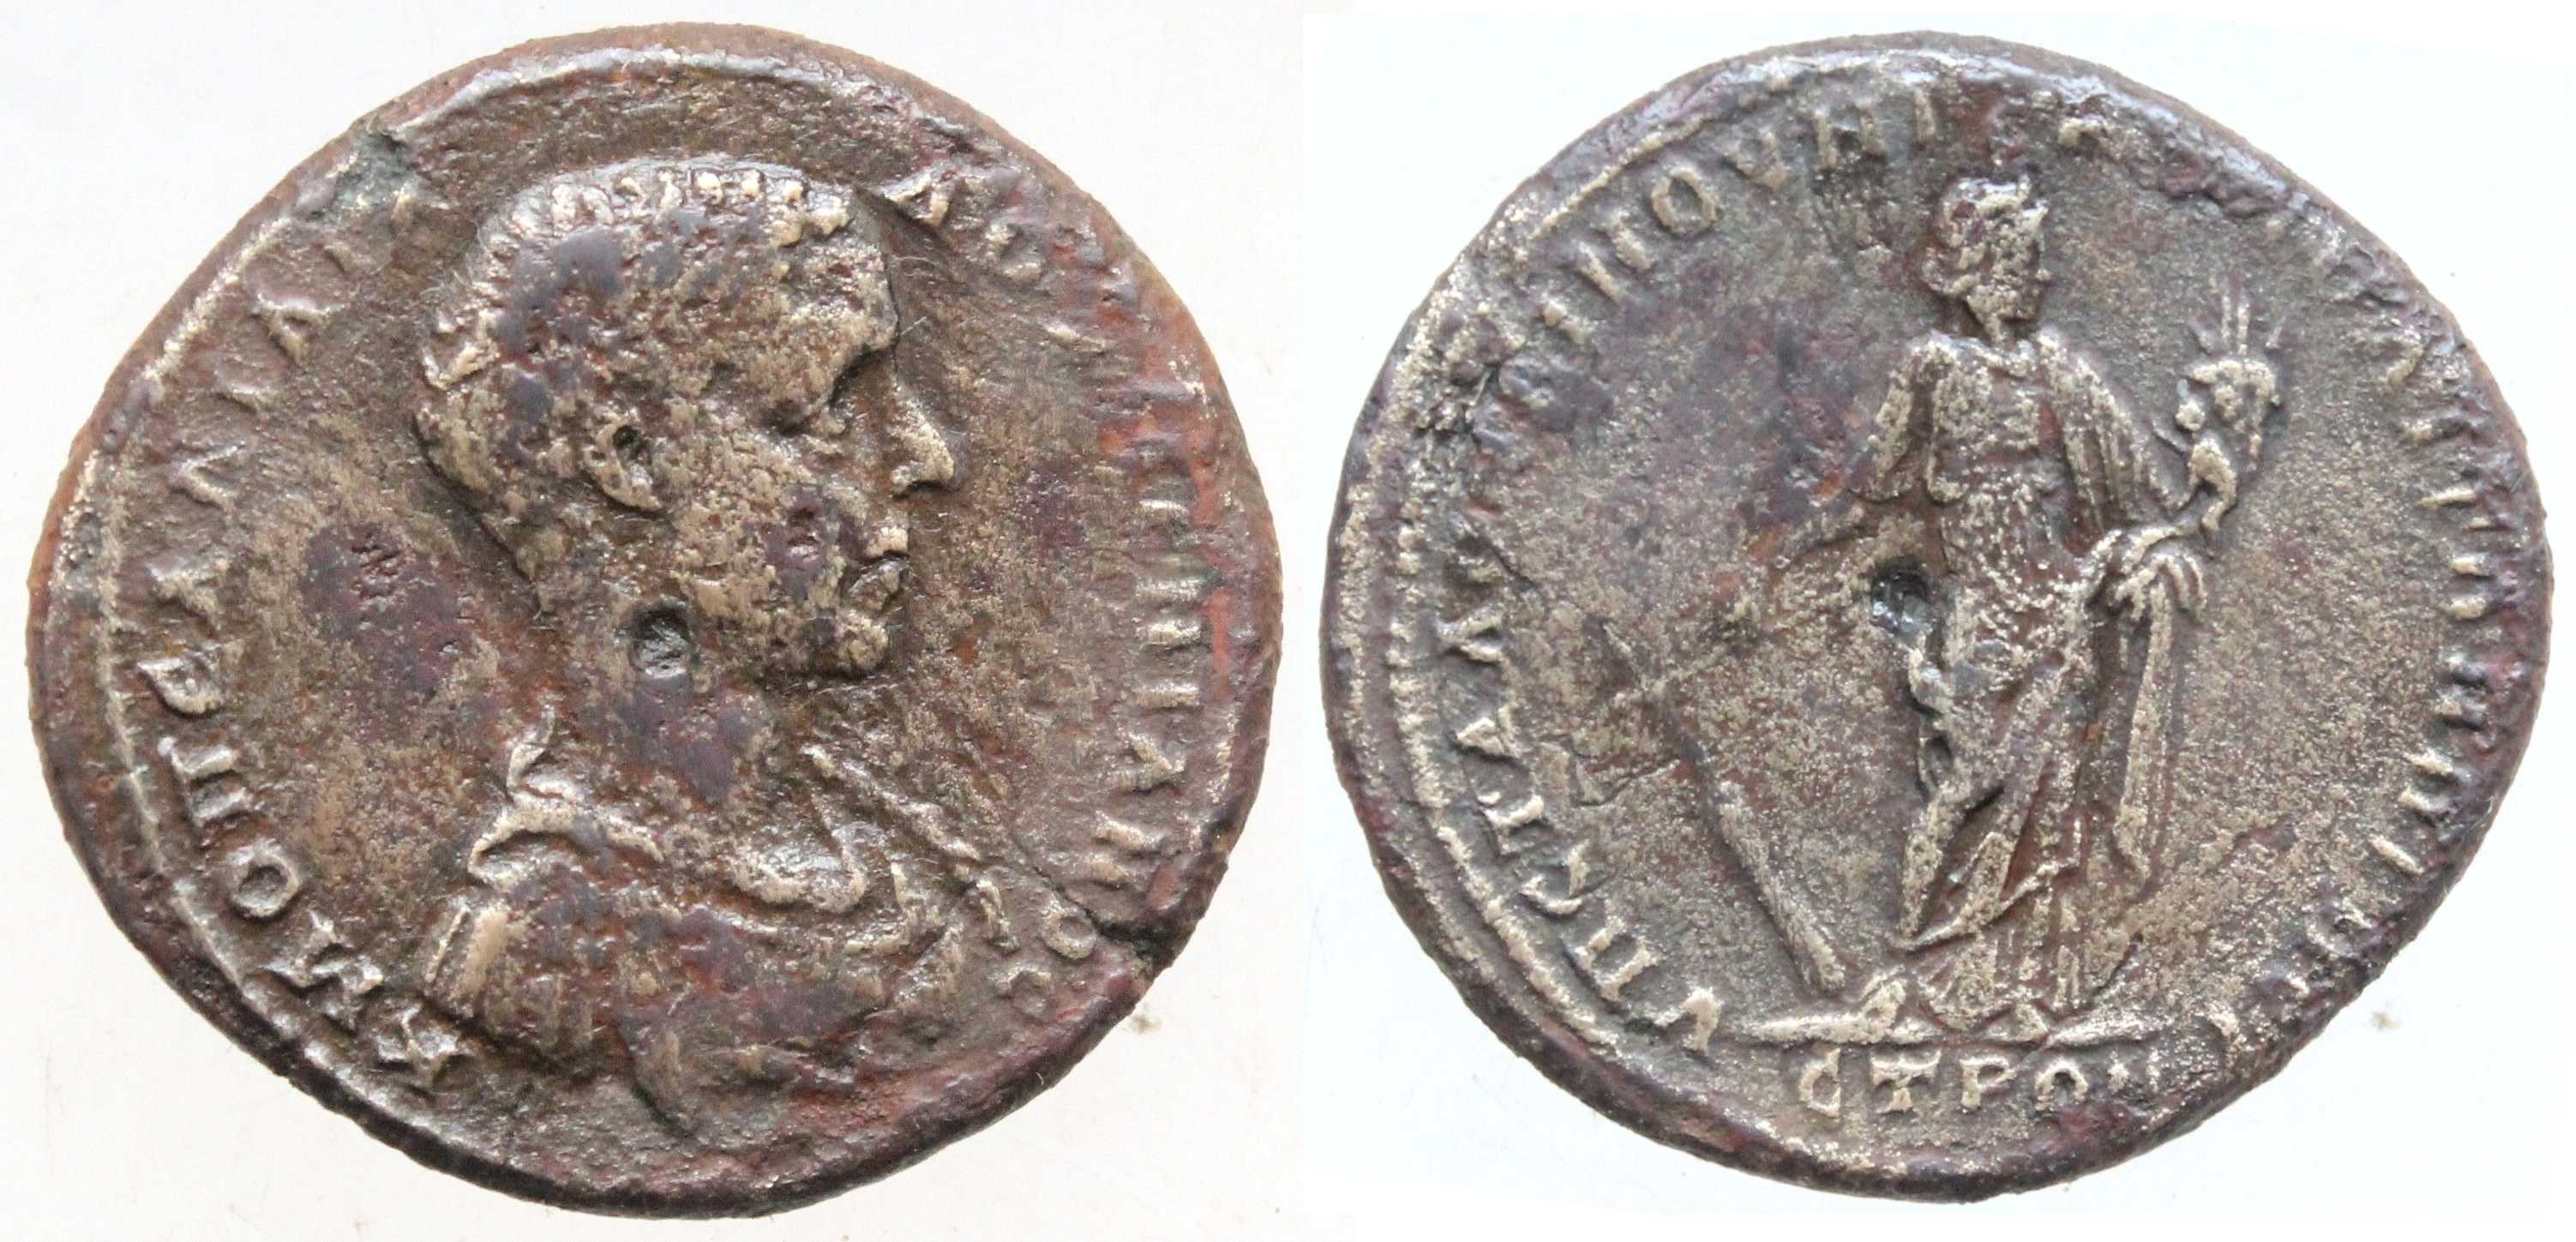 5966 Nicopolis ad Istrum Moesia Inferior Diadumenianus AE